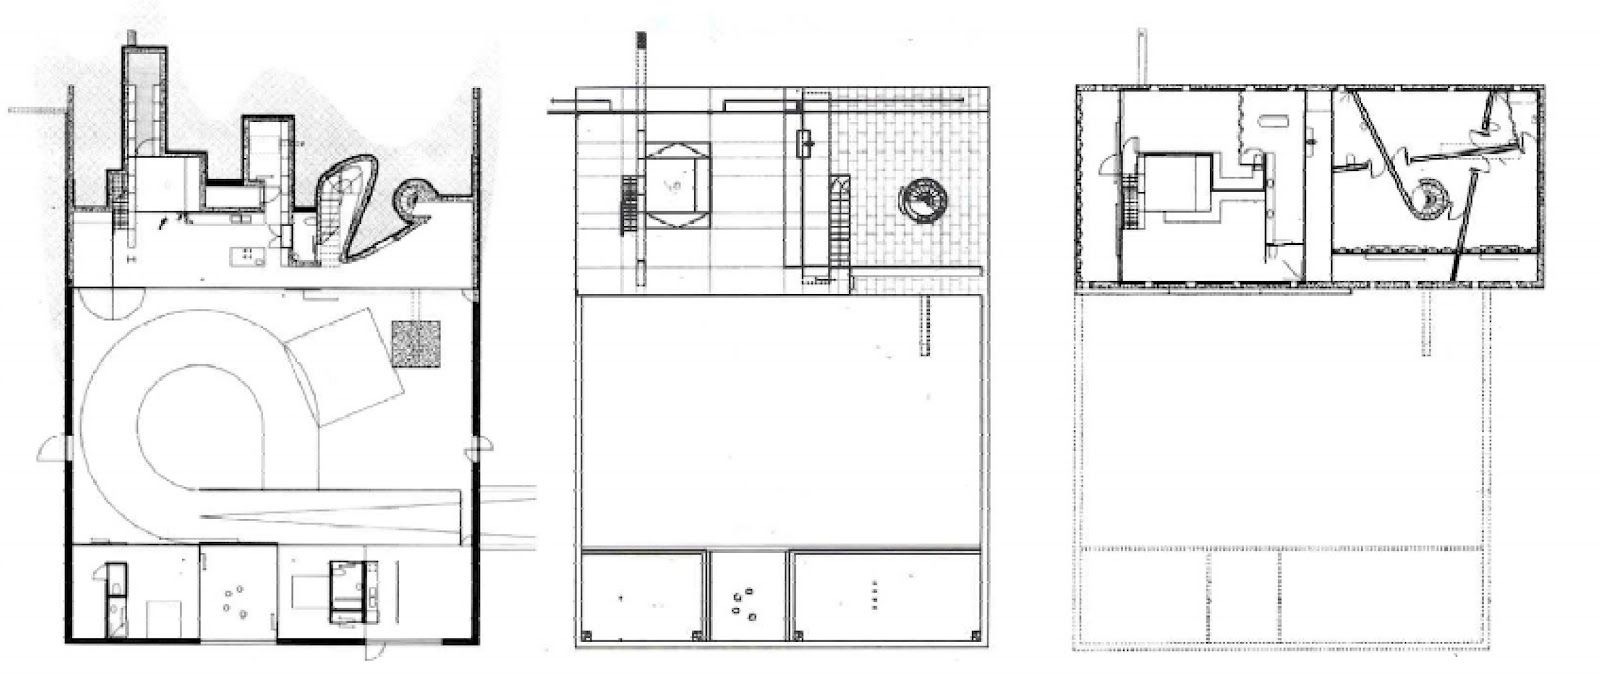 ARCH1201 week 4 analysis of Bordeaux House Rem koolhaas